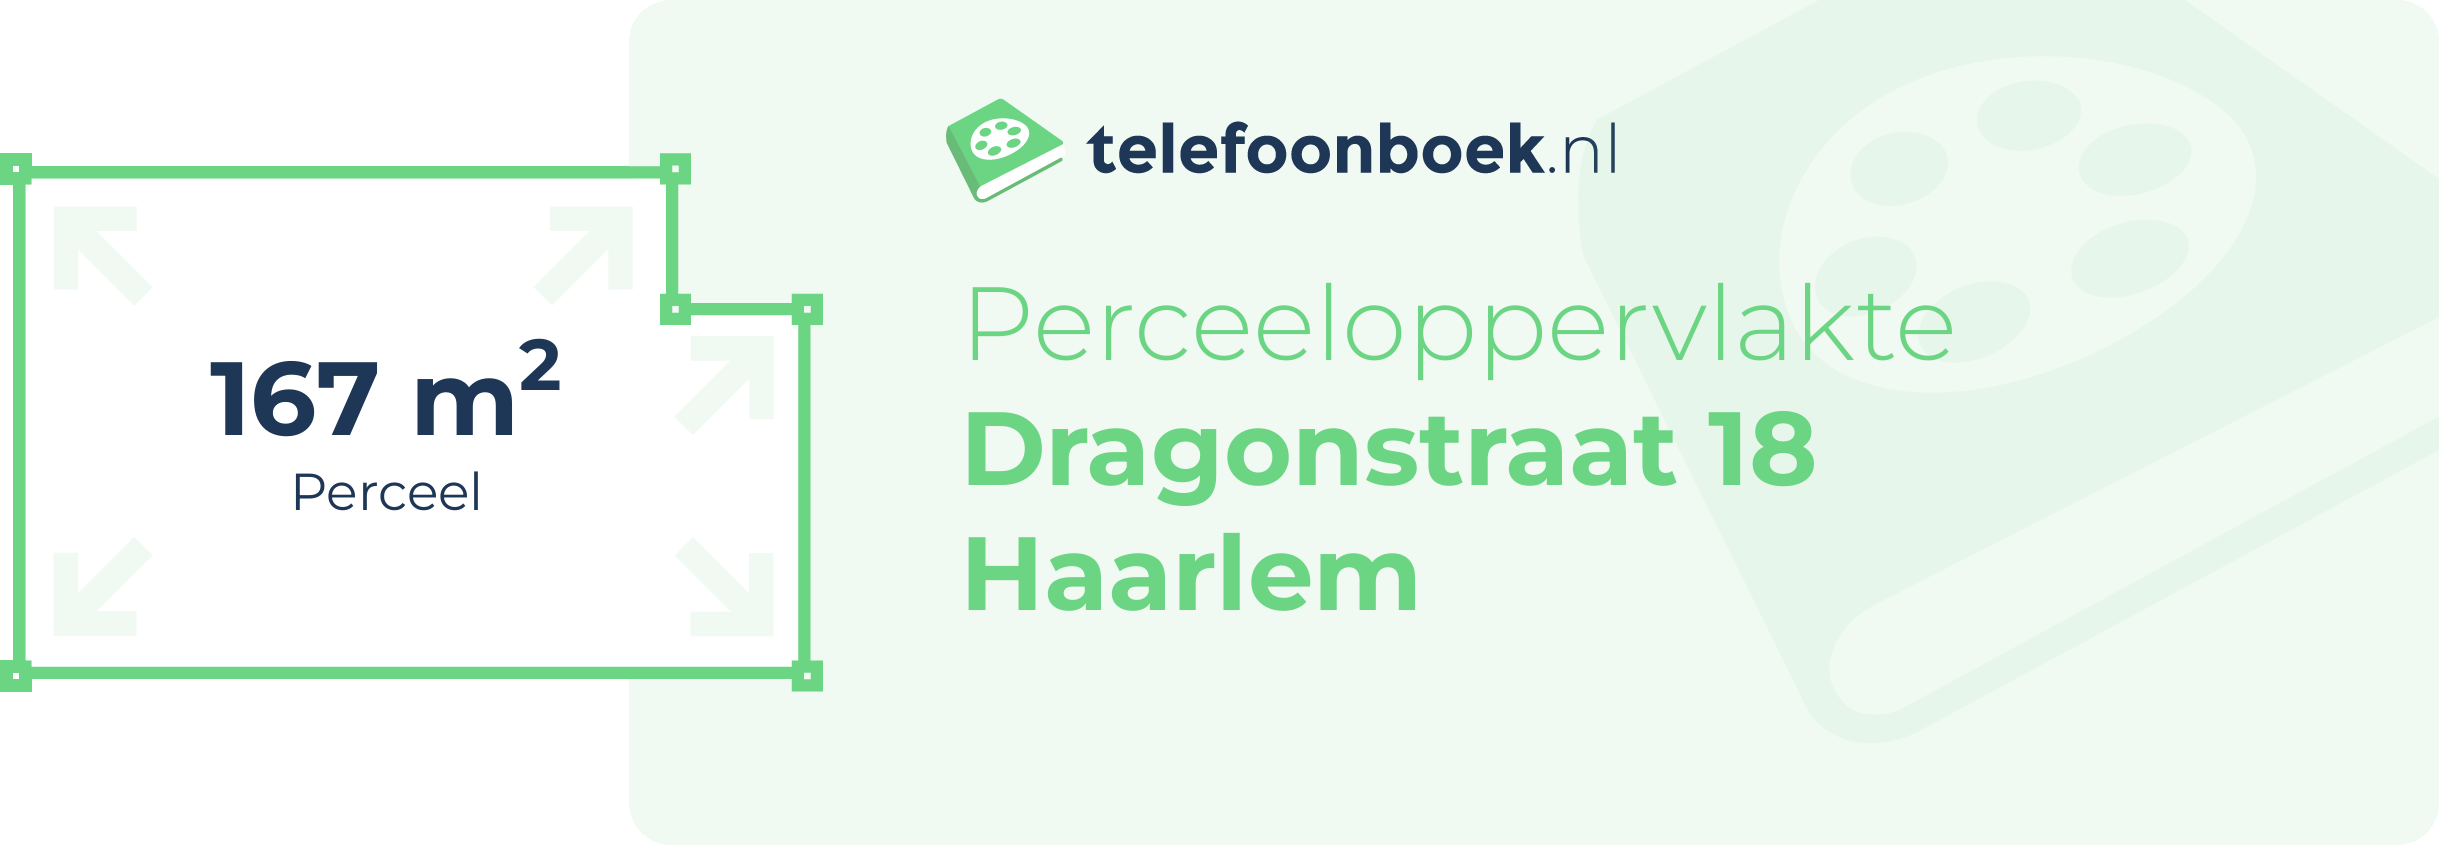 Perceeloppervlakte Dragonstraat 18 Haarlem